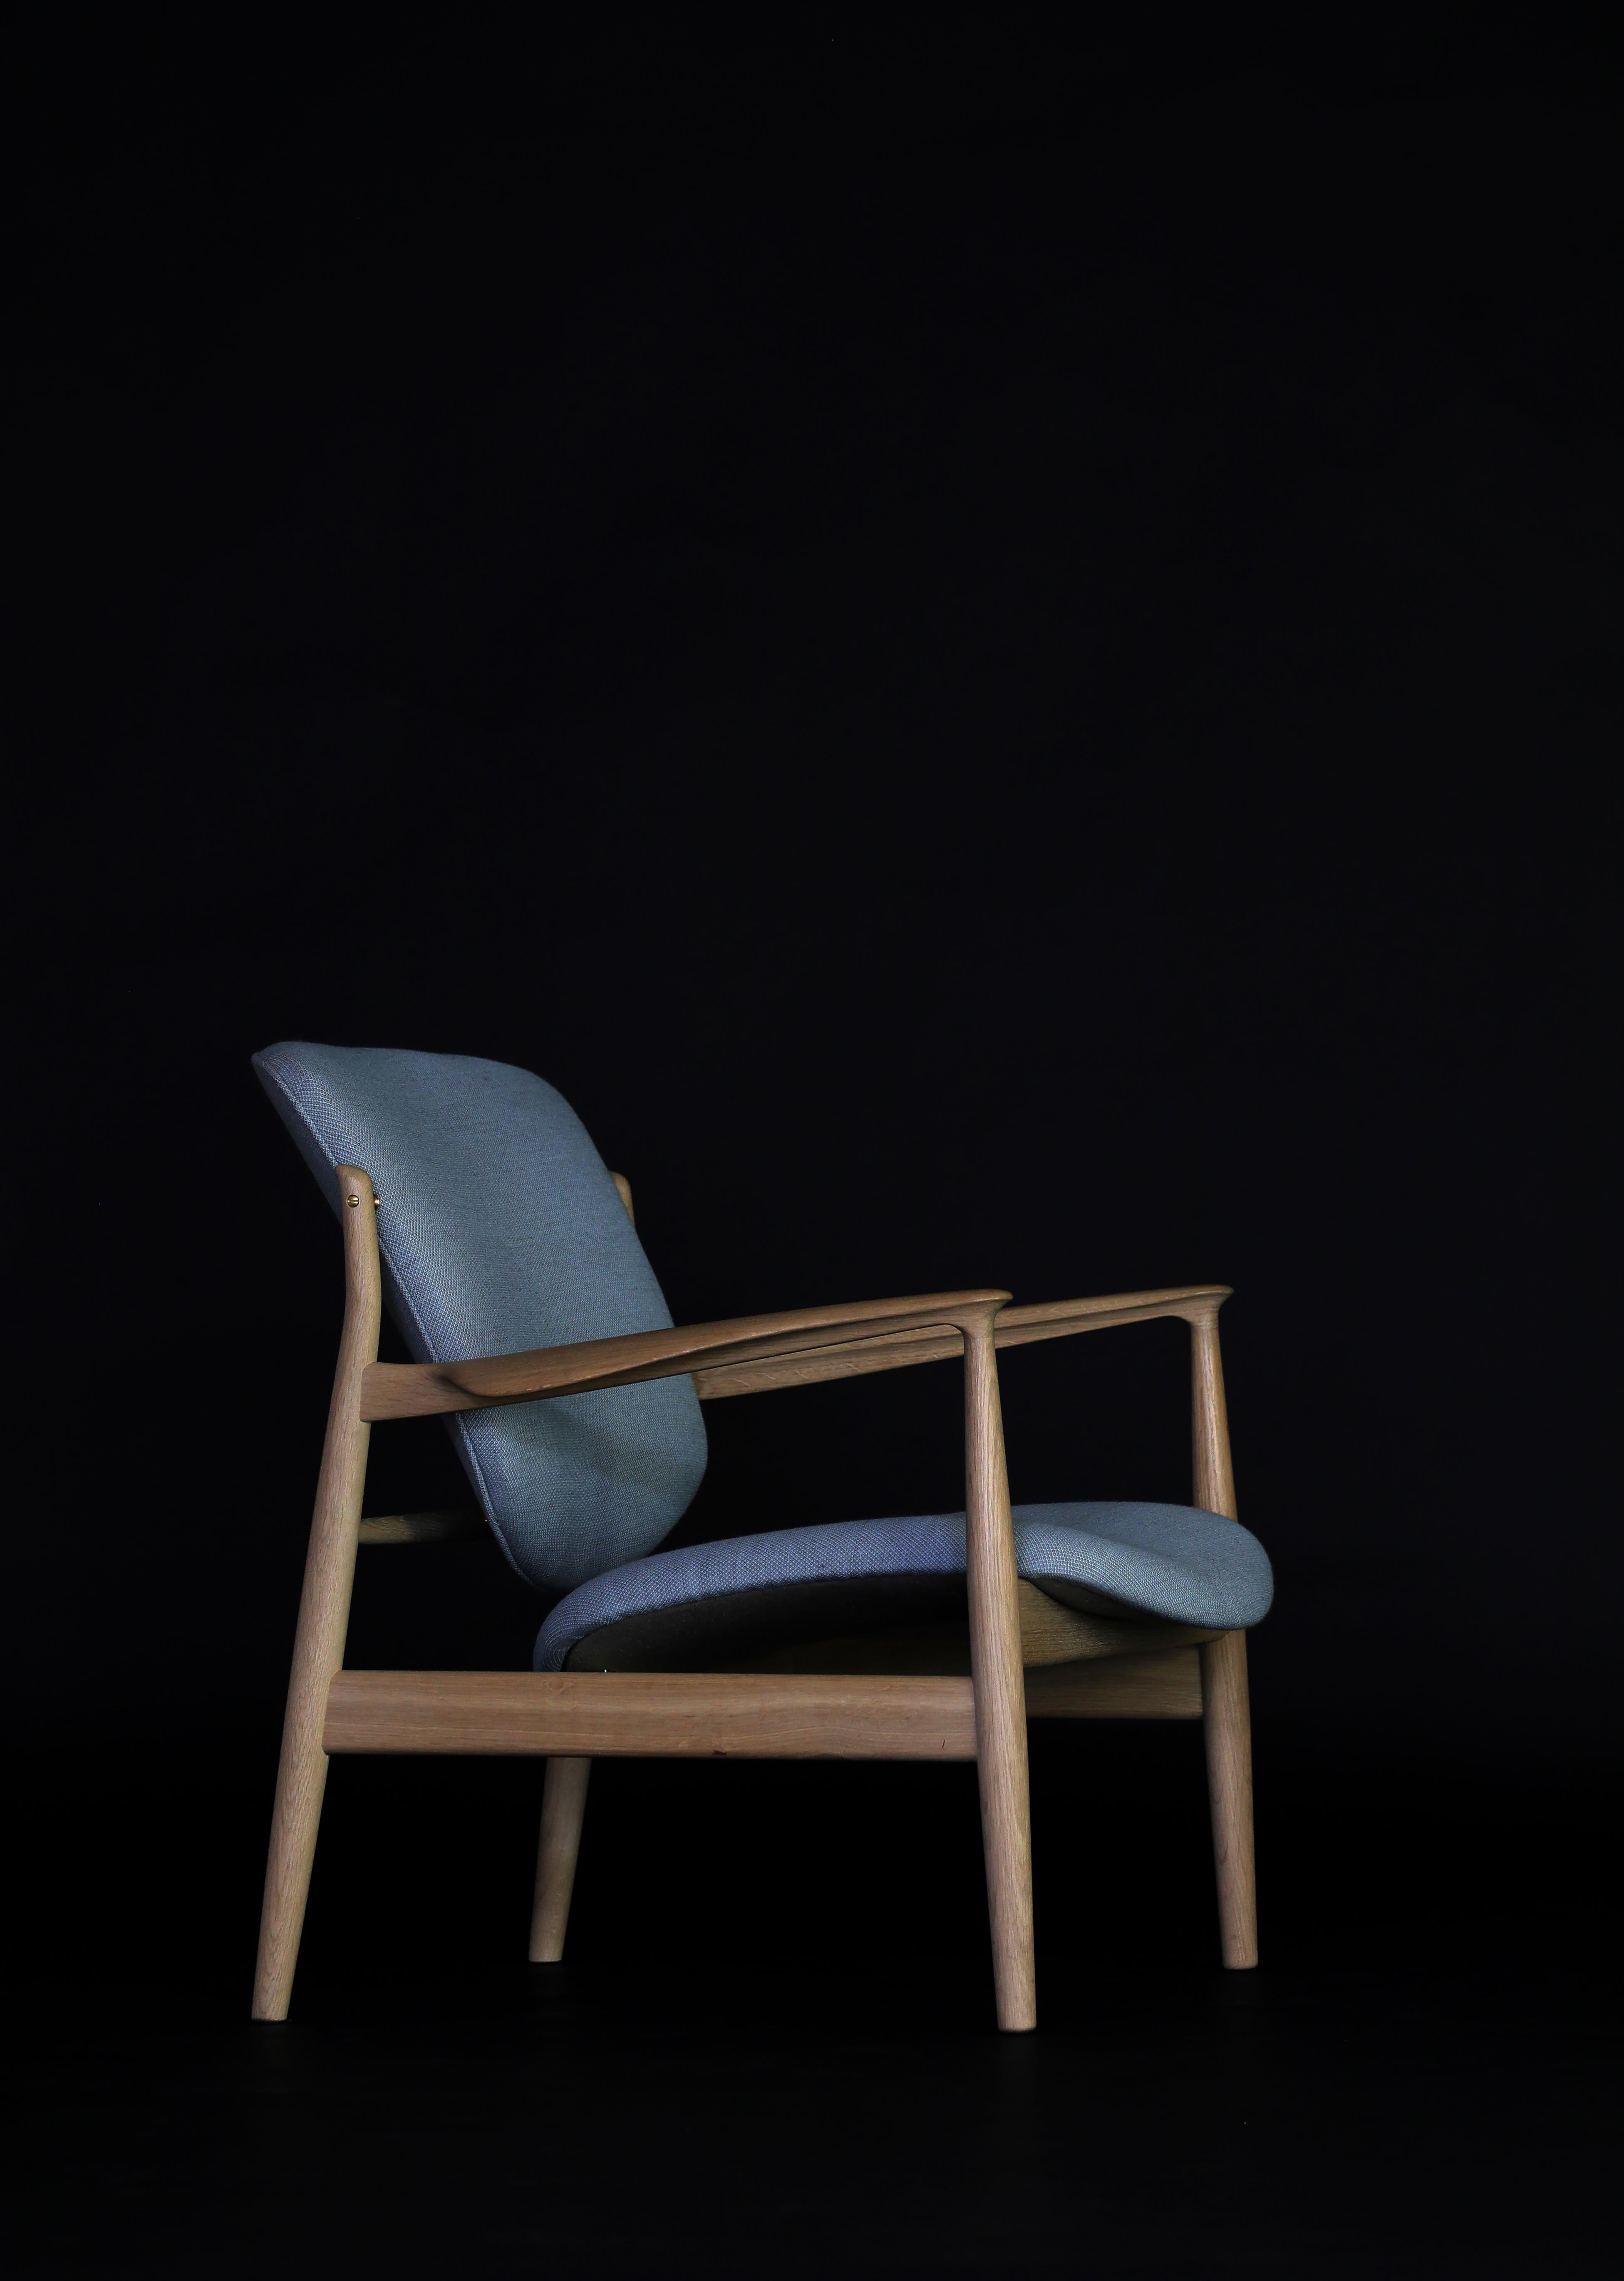 Scandinavian Modern Finn Juhl France Chair in Wood and Upholstery